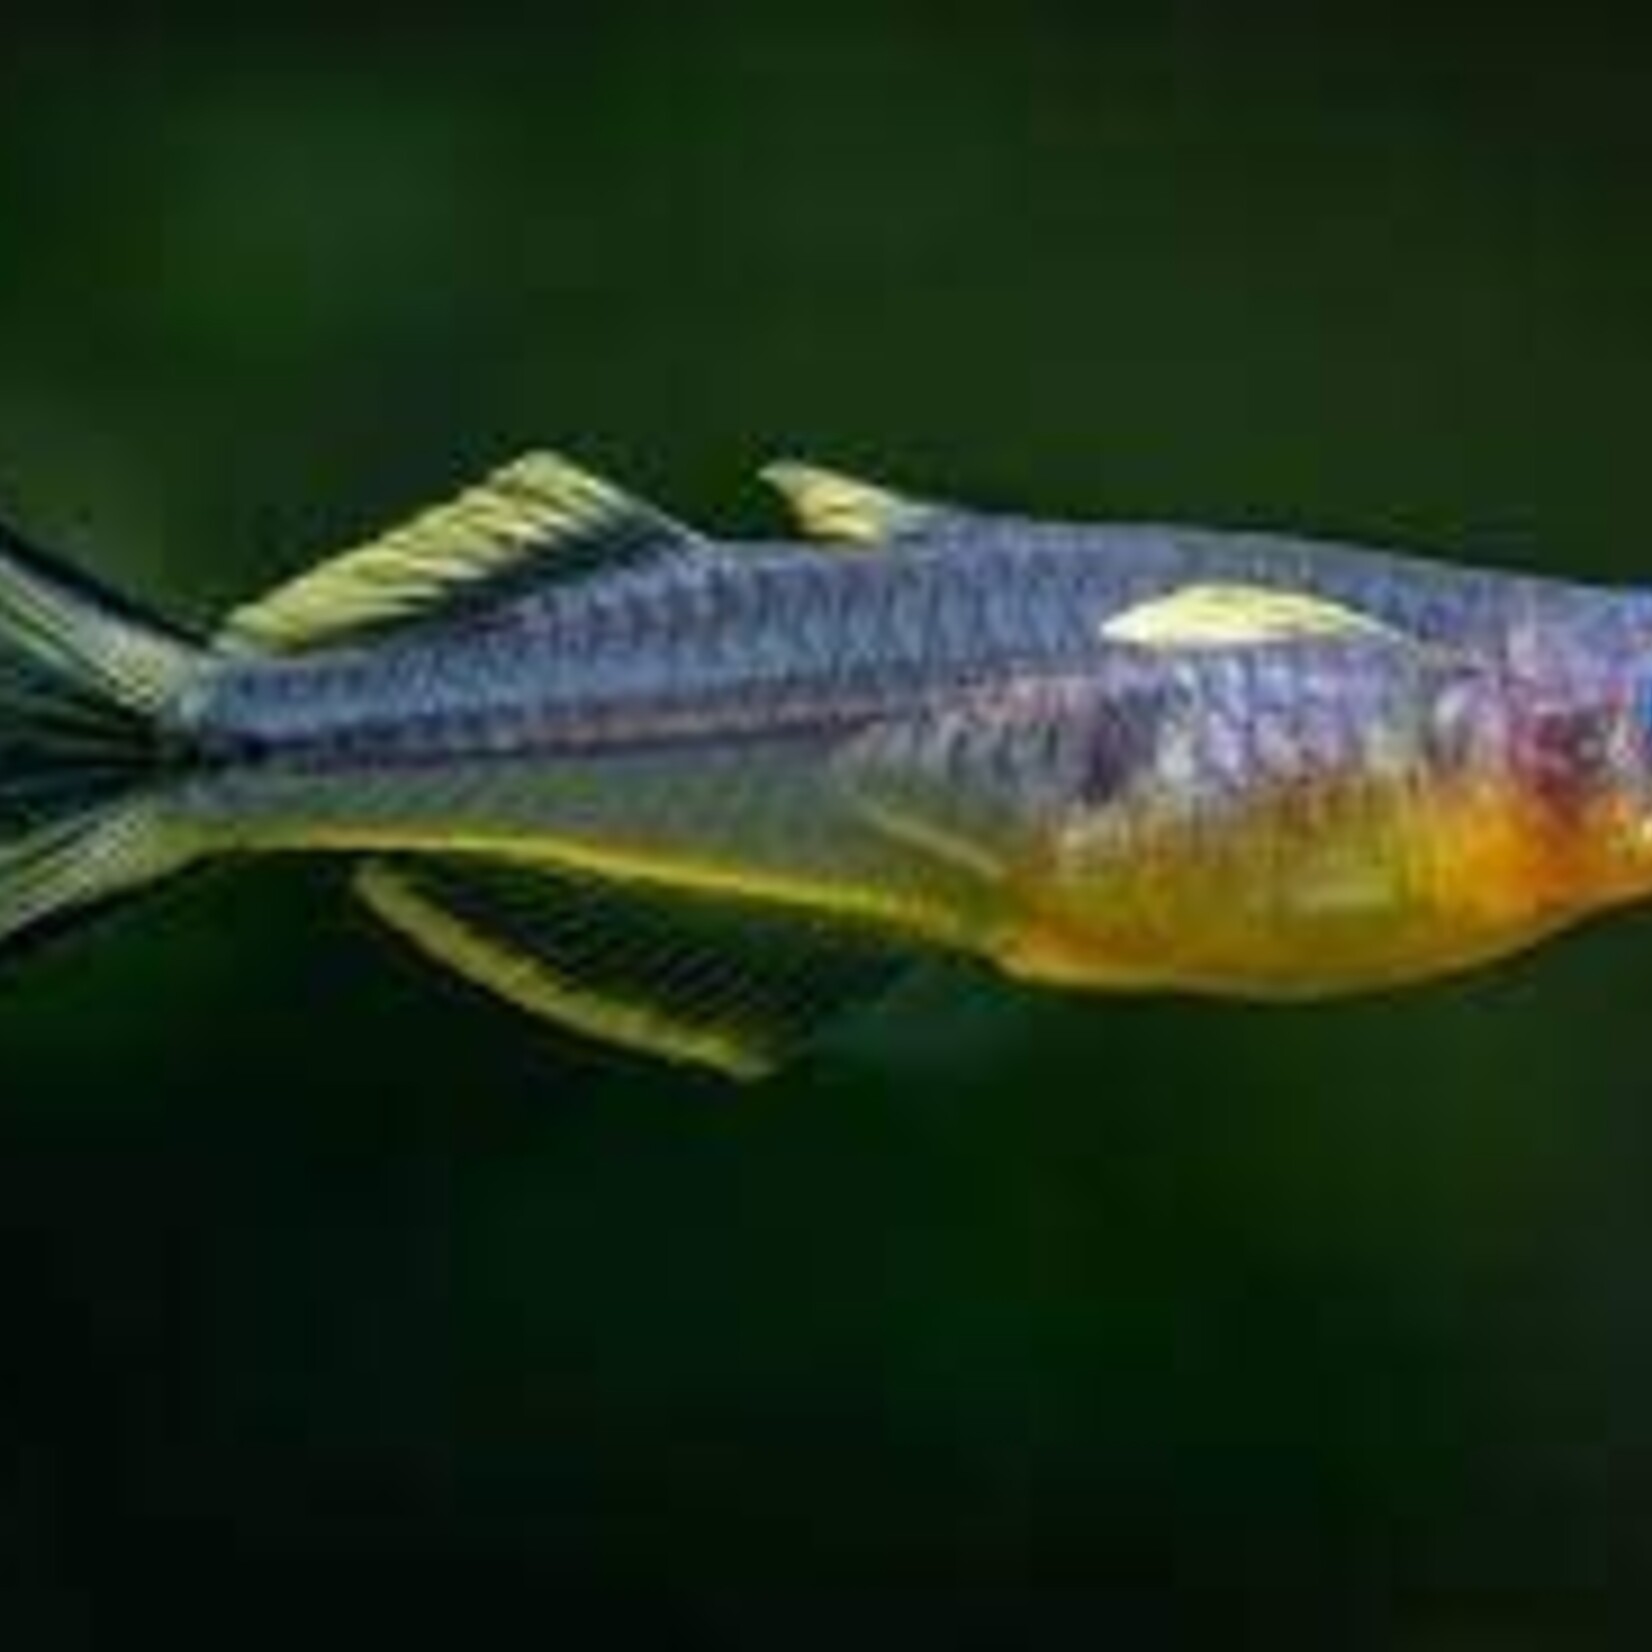 FISH(NEW) - Forktail Rainbow Fish